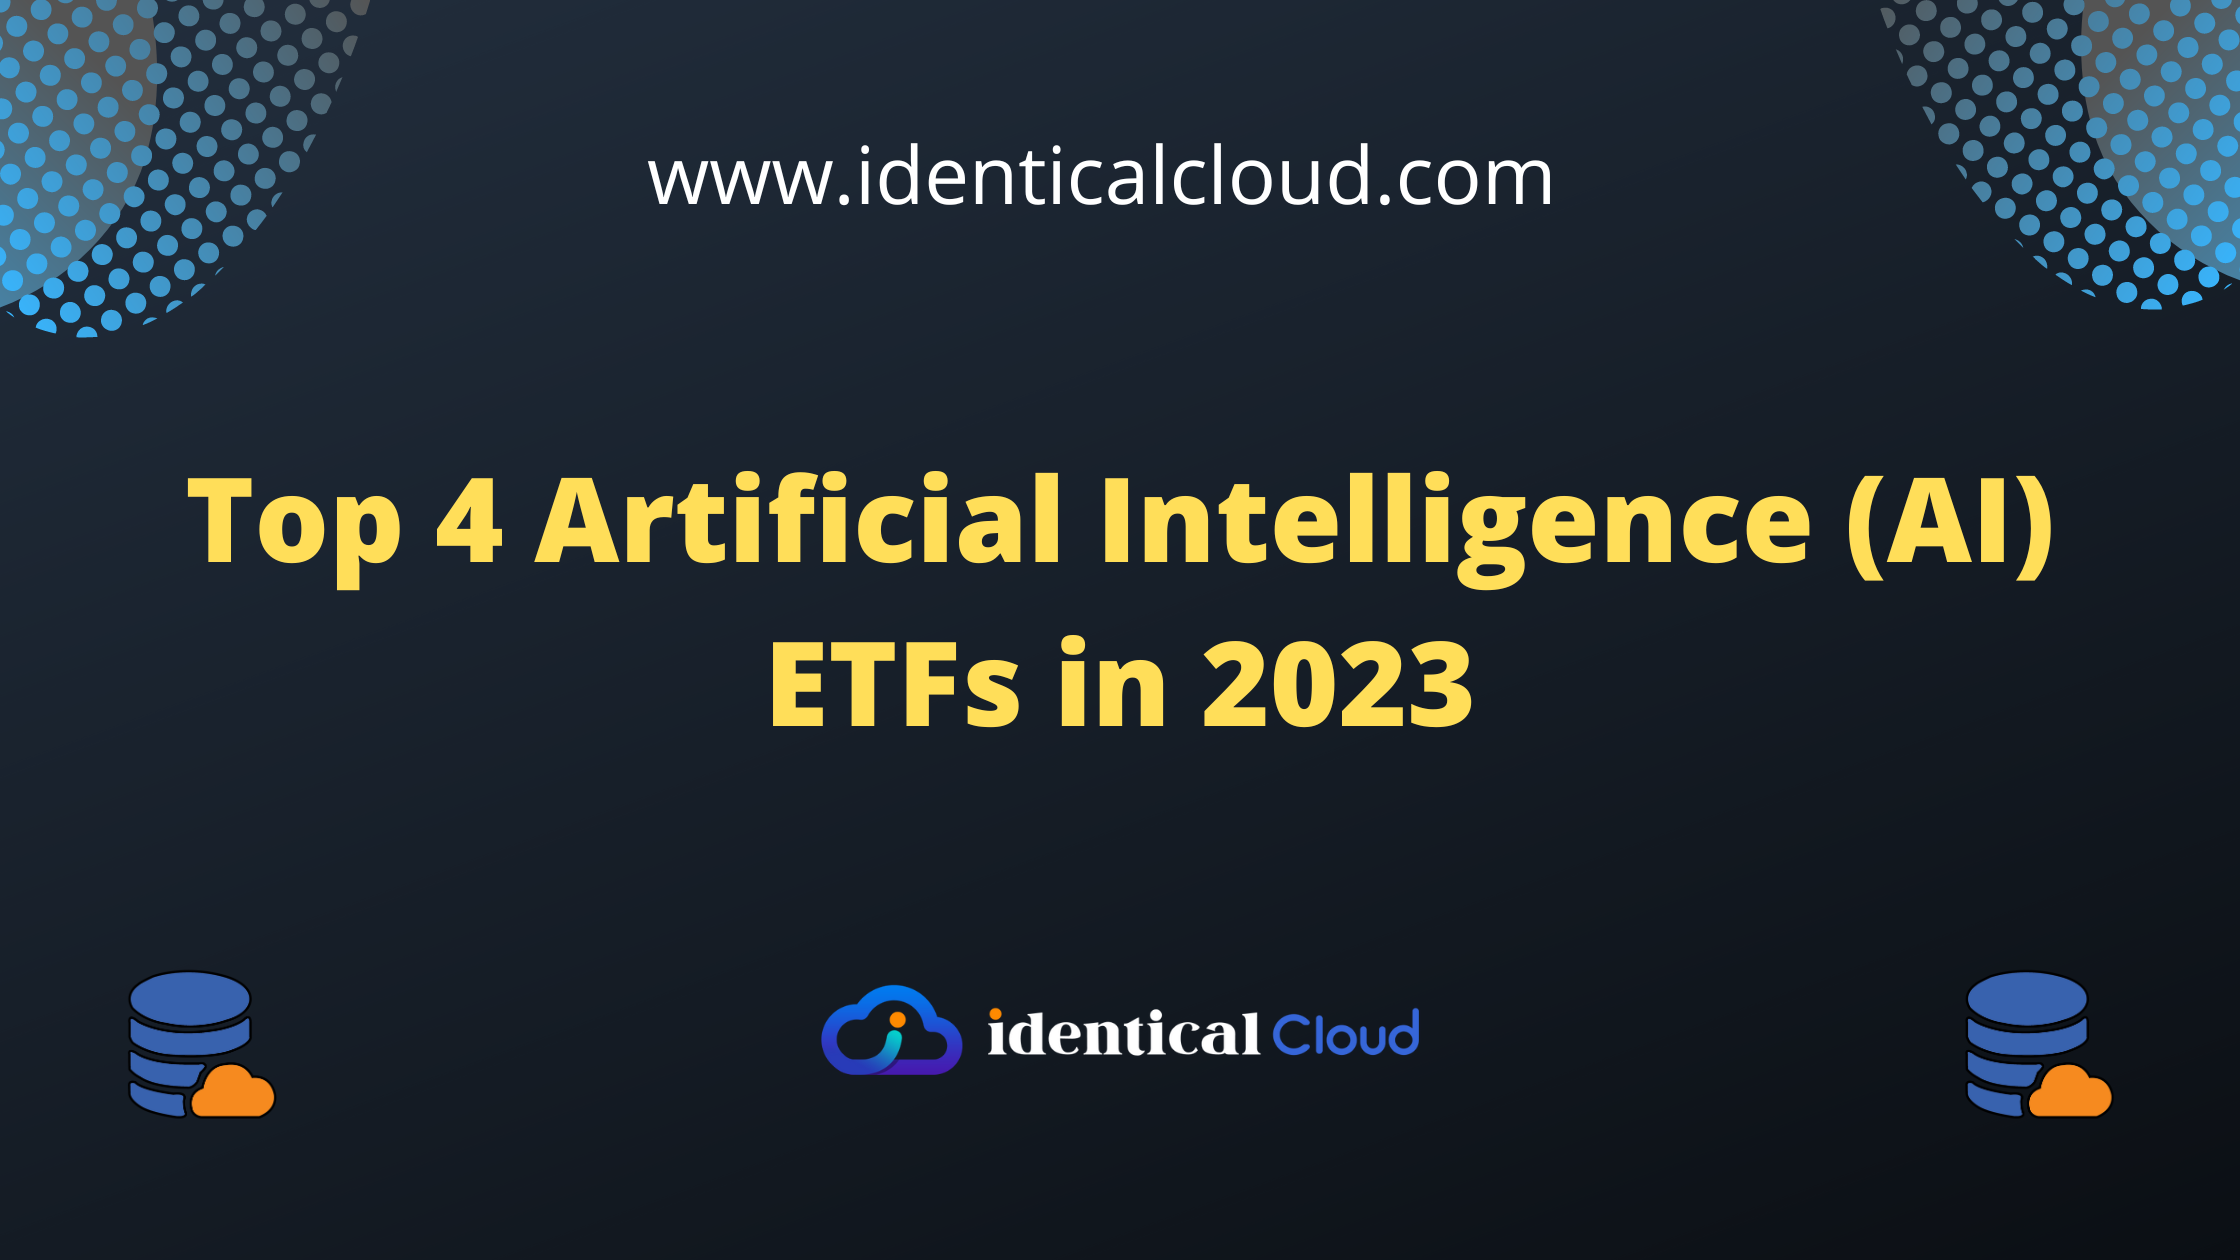 Top 4 Artificial Intelligence (AI) ETFs in 2023 - identicalcloud.com